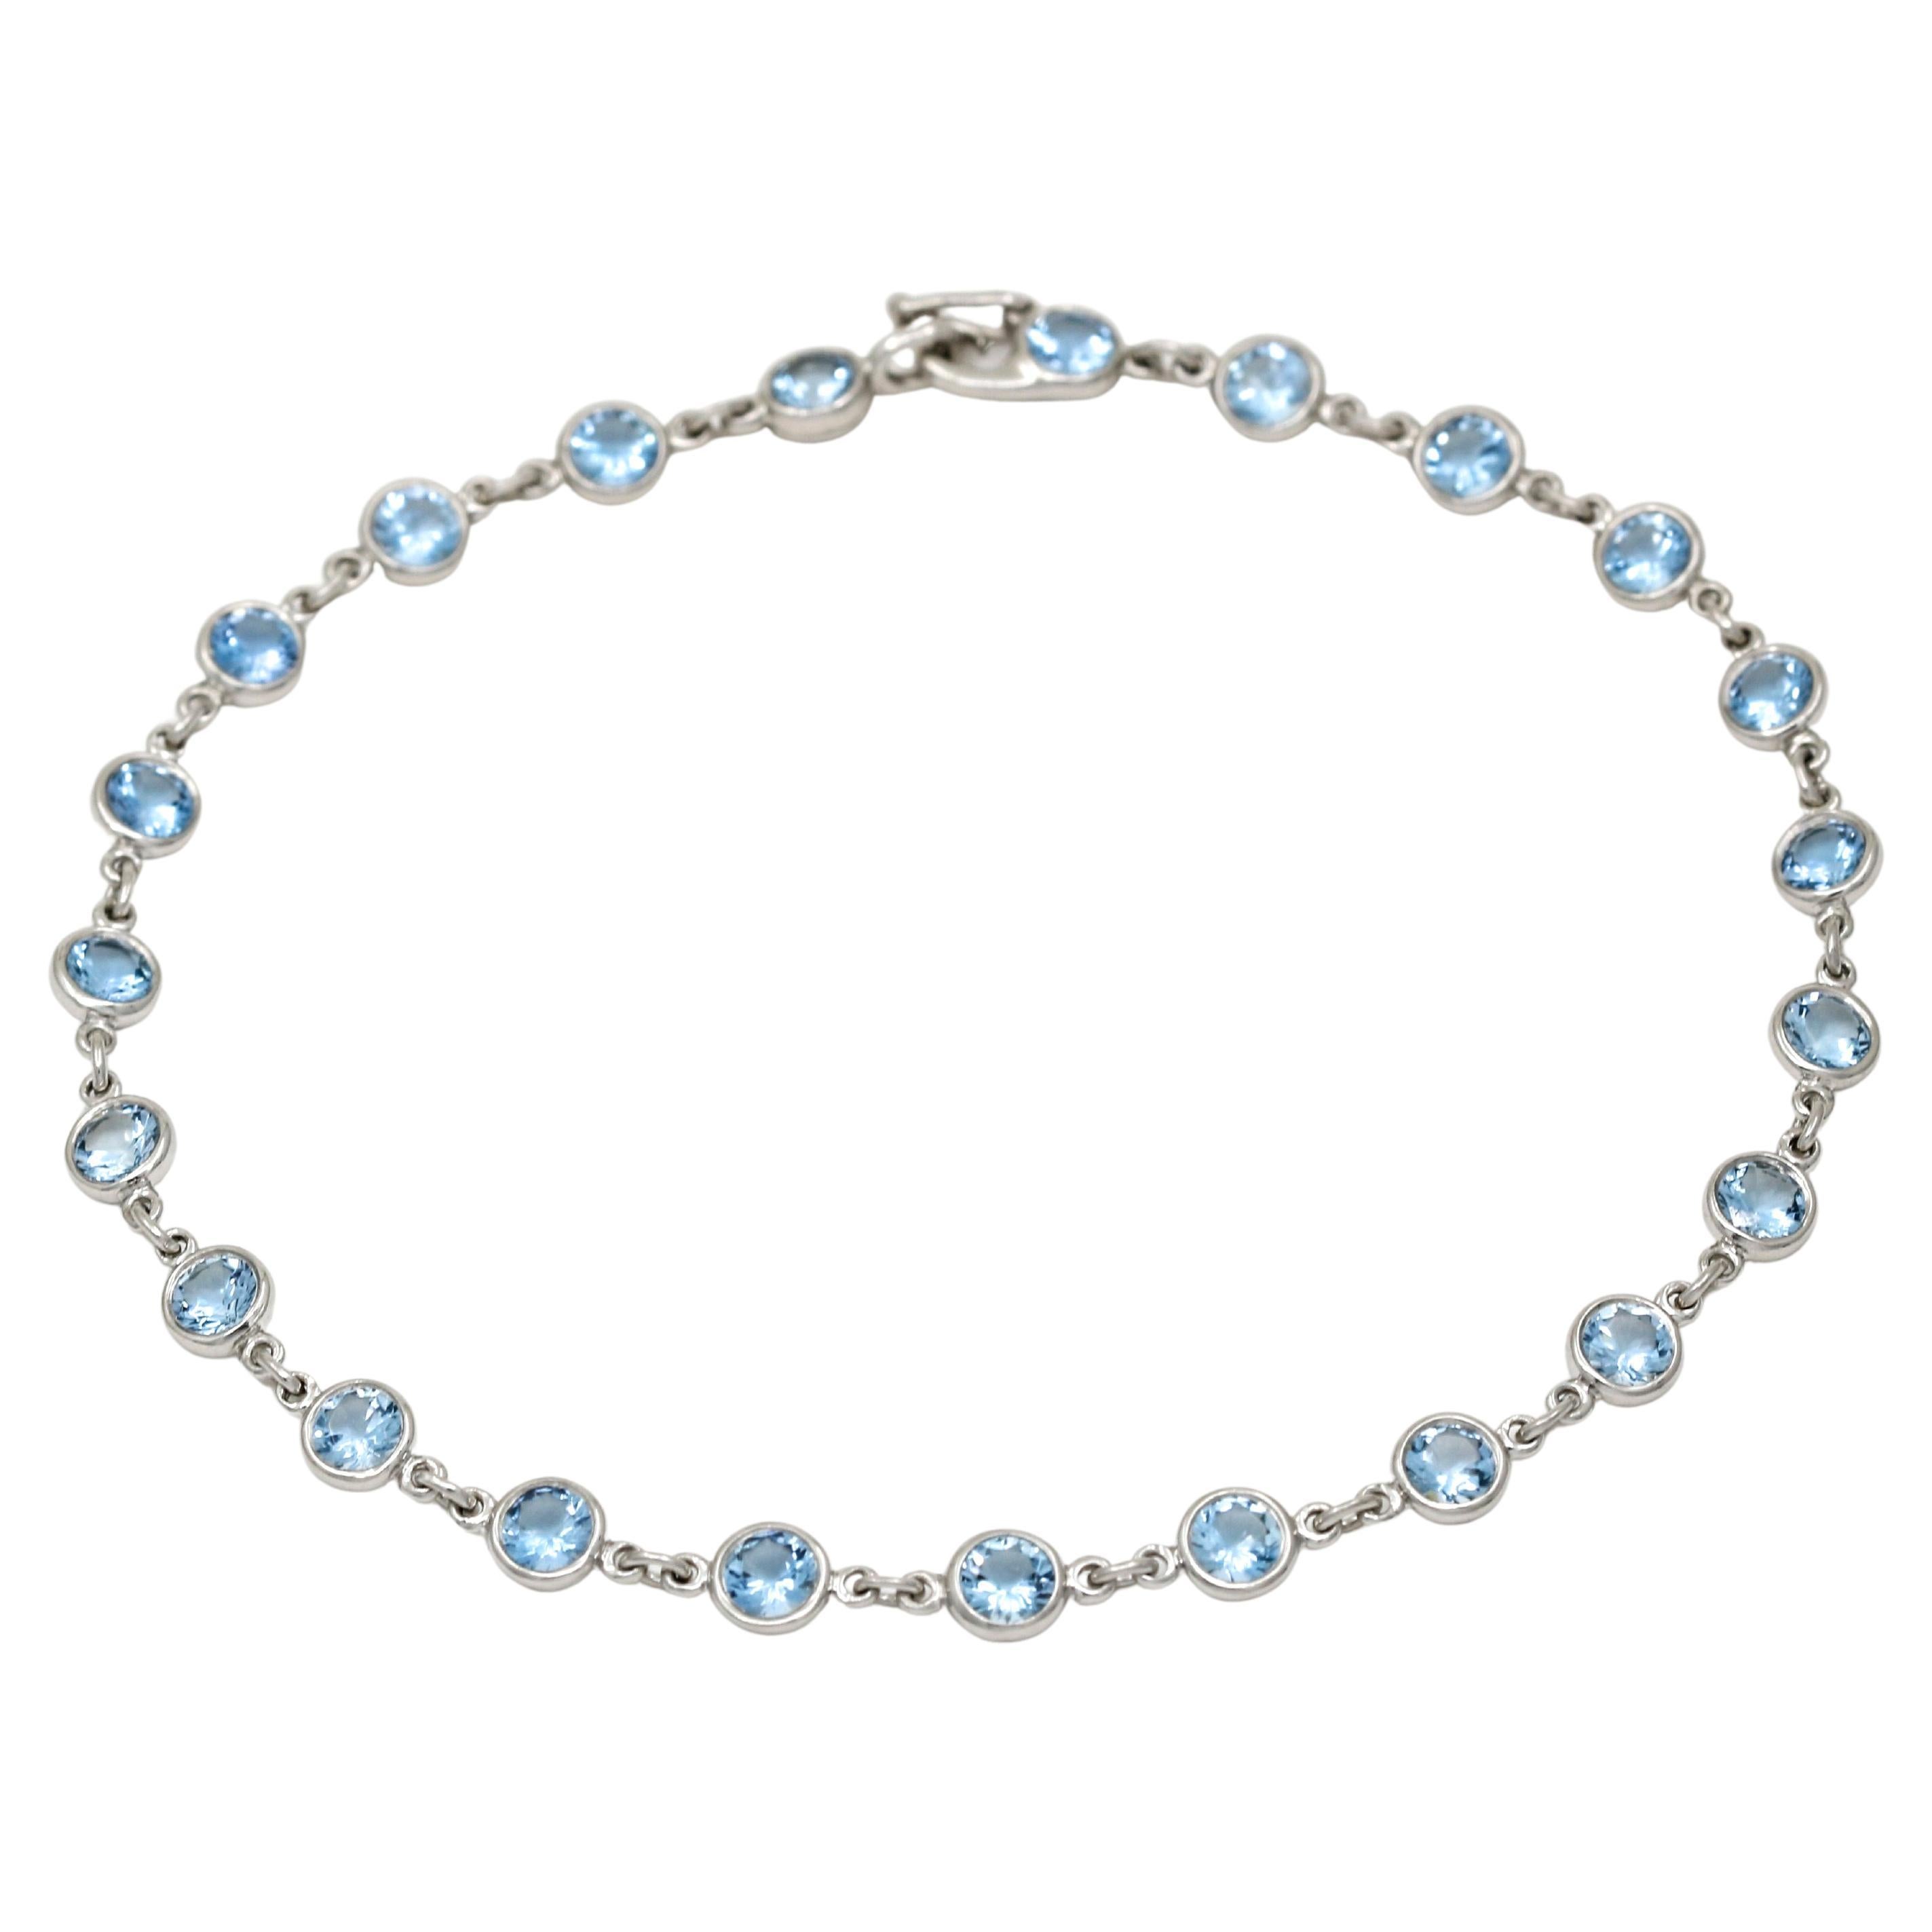 Rare Tiffany & Co. Platinum Aquamarine Colors by the Yard Bracelet - 23 Stones For Sale